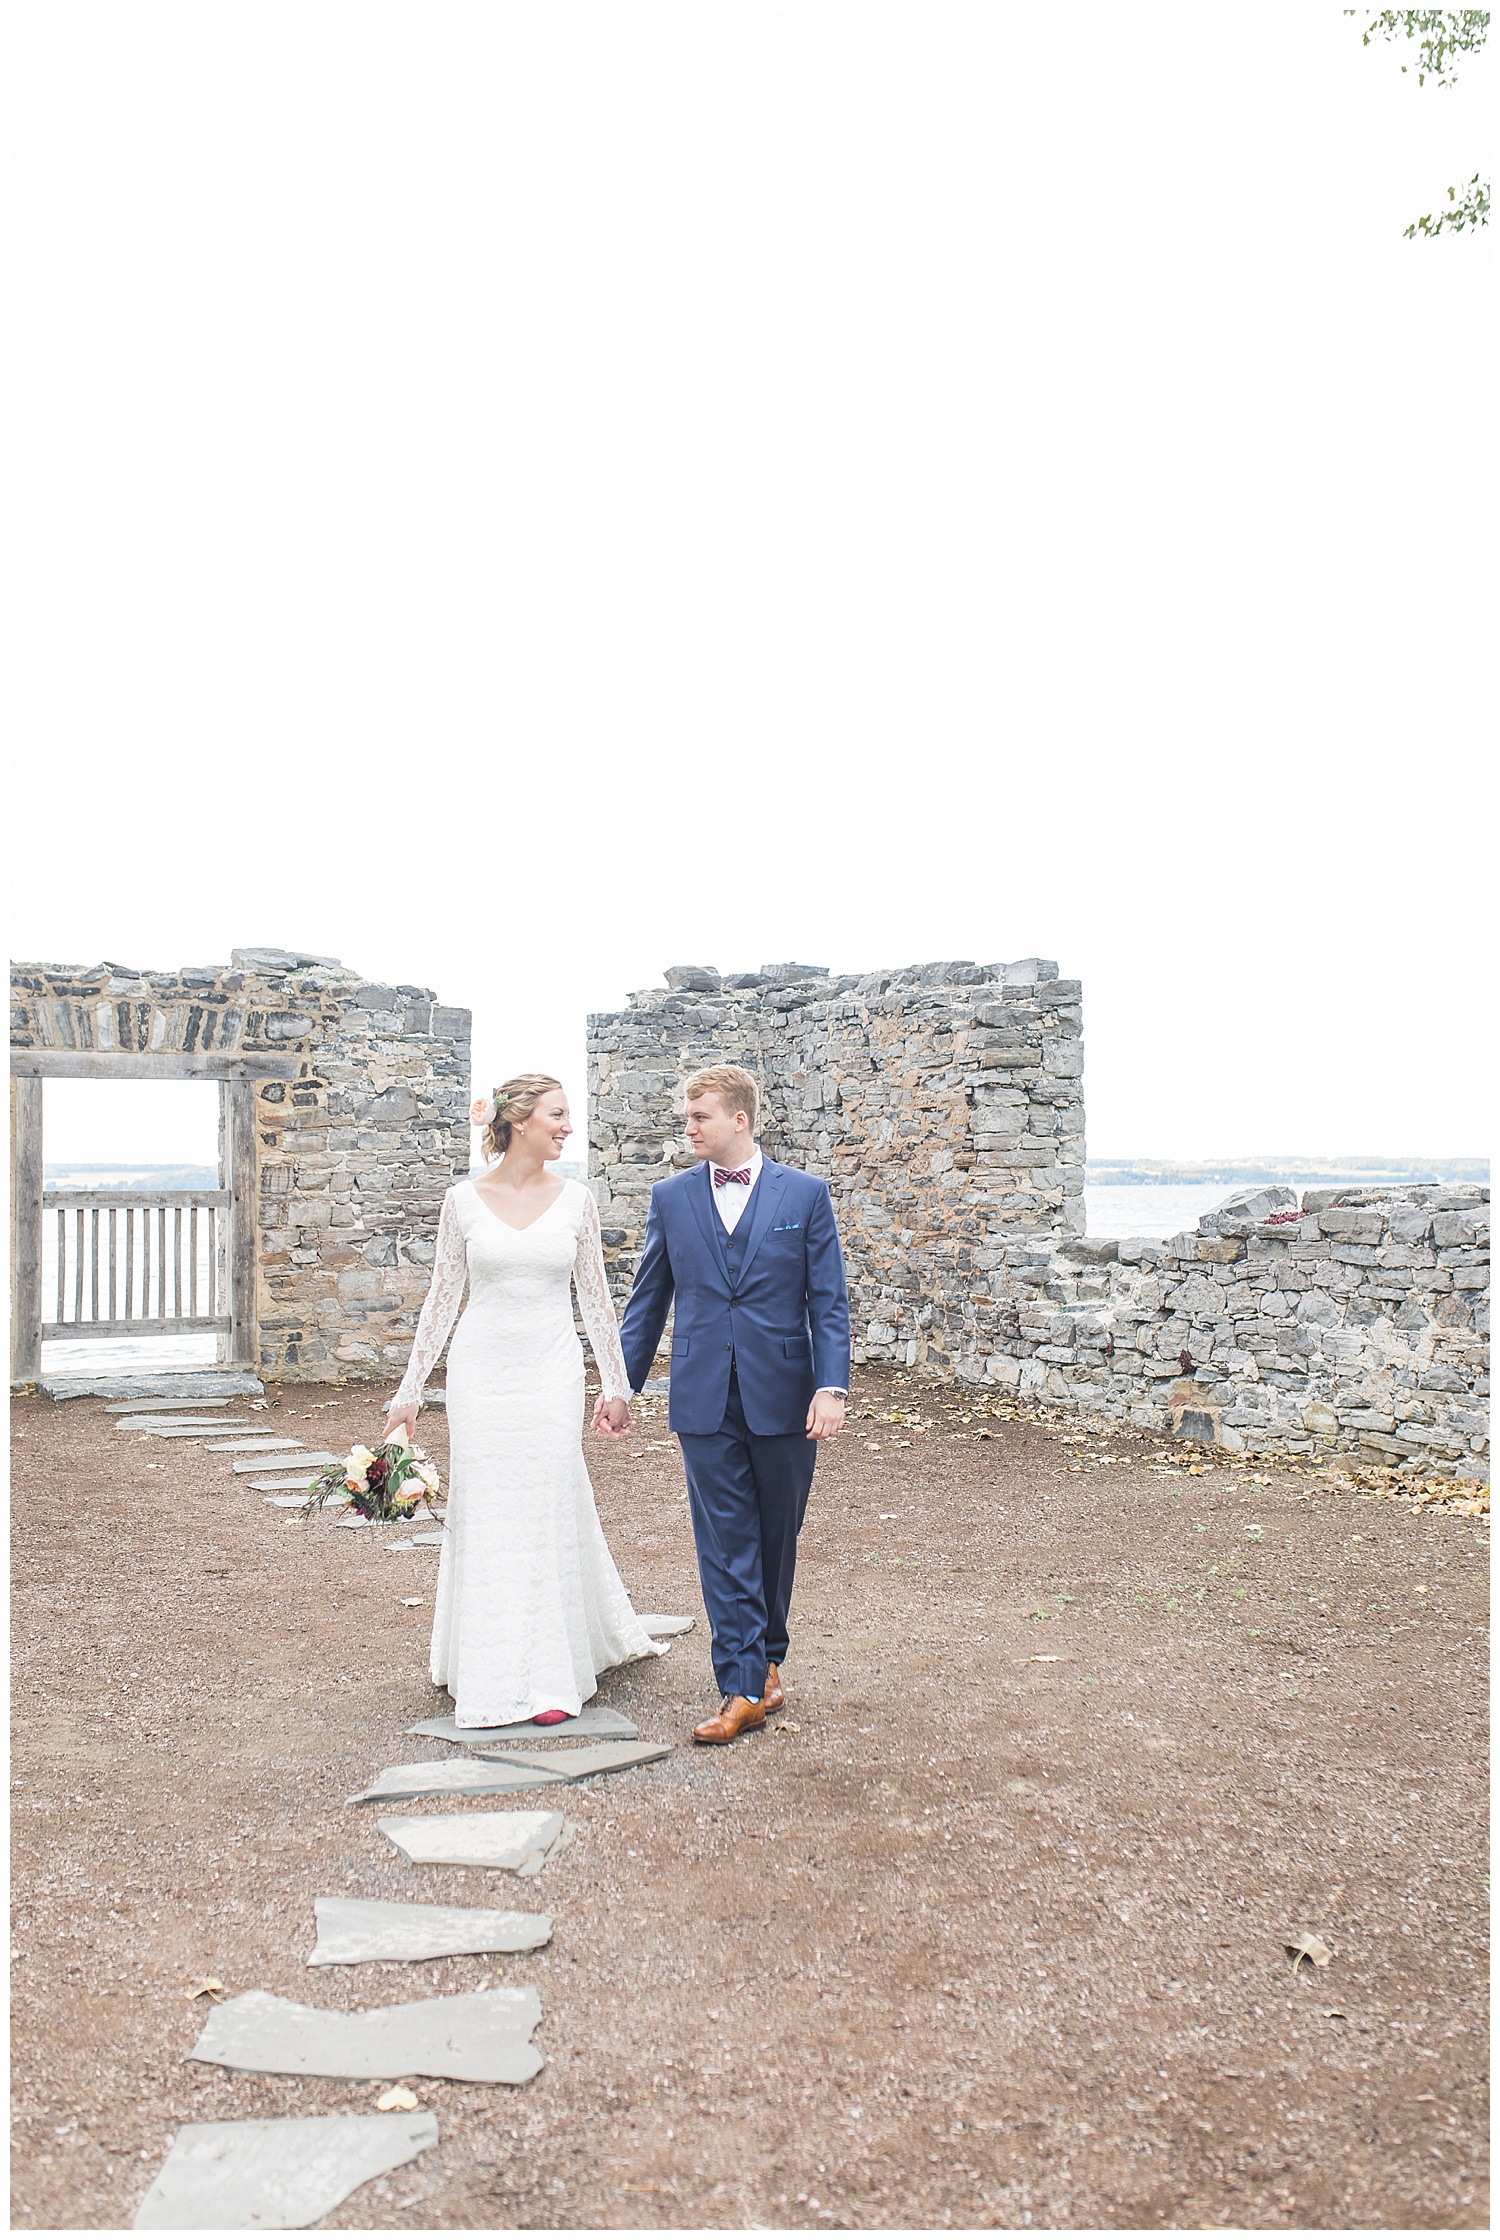 Margaret and Colin - Inns of Aurora - Lass and Beau-859_Buffalo wedding photography.jpg